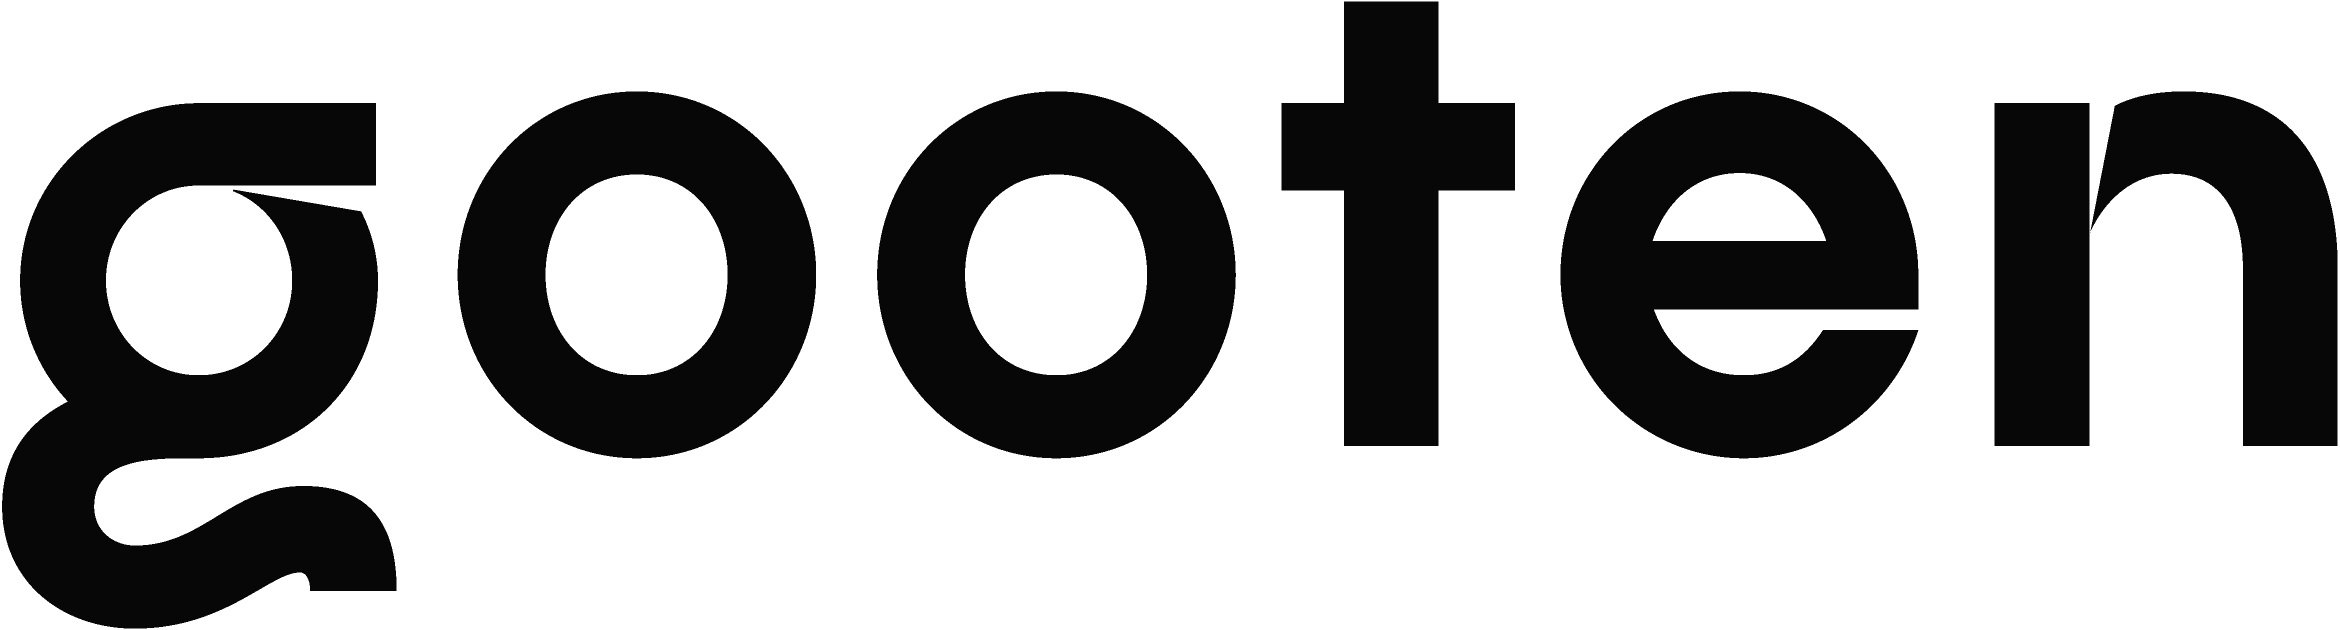 Gooten+Logo.jpg